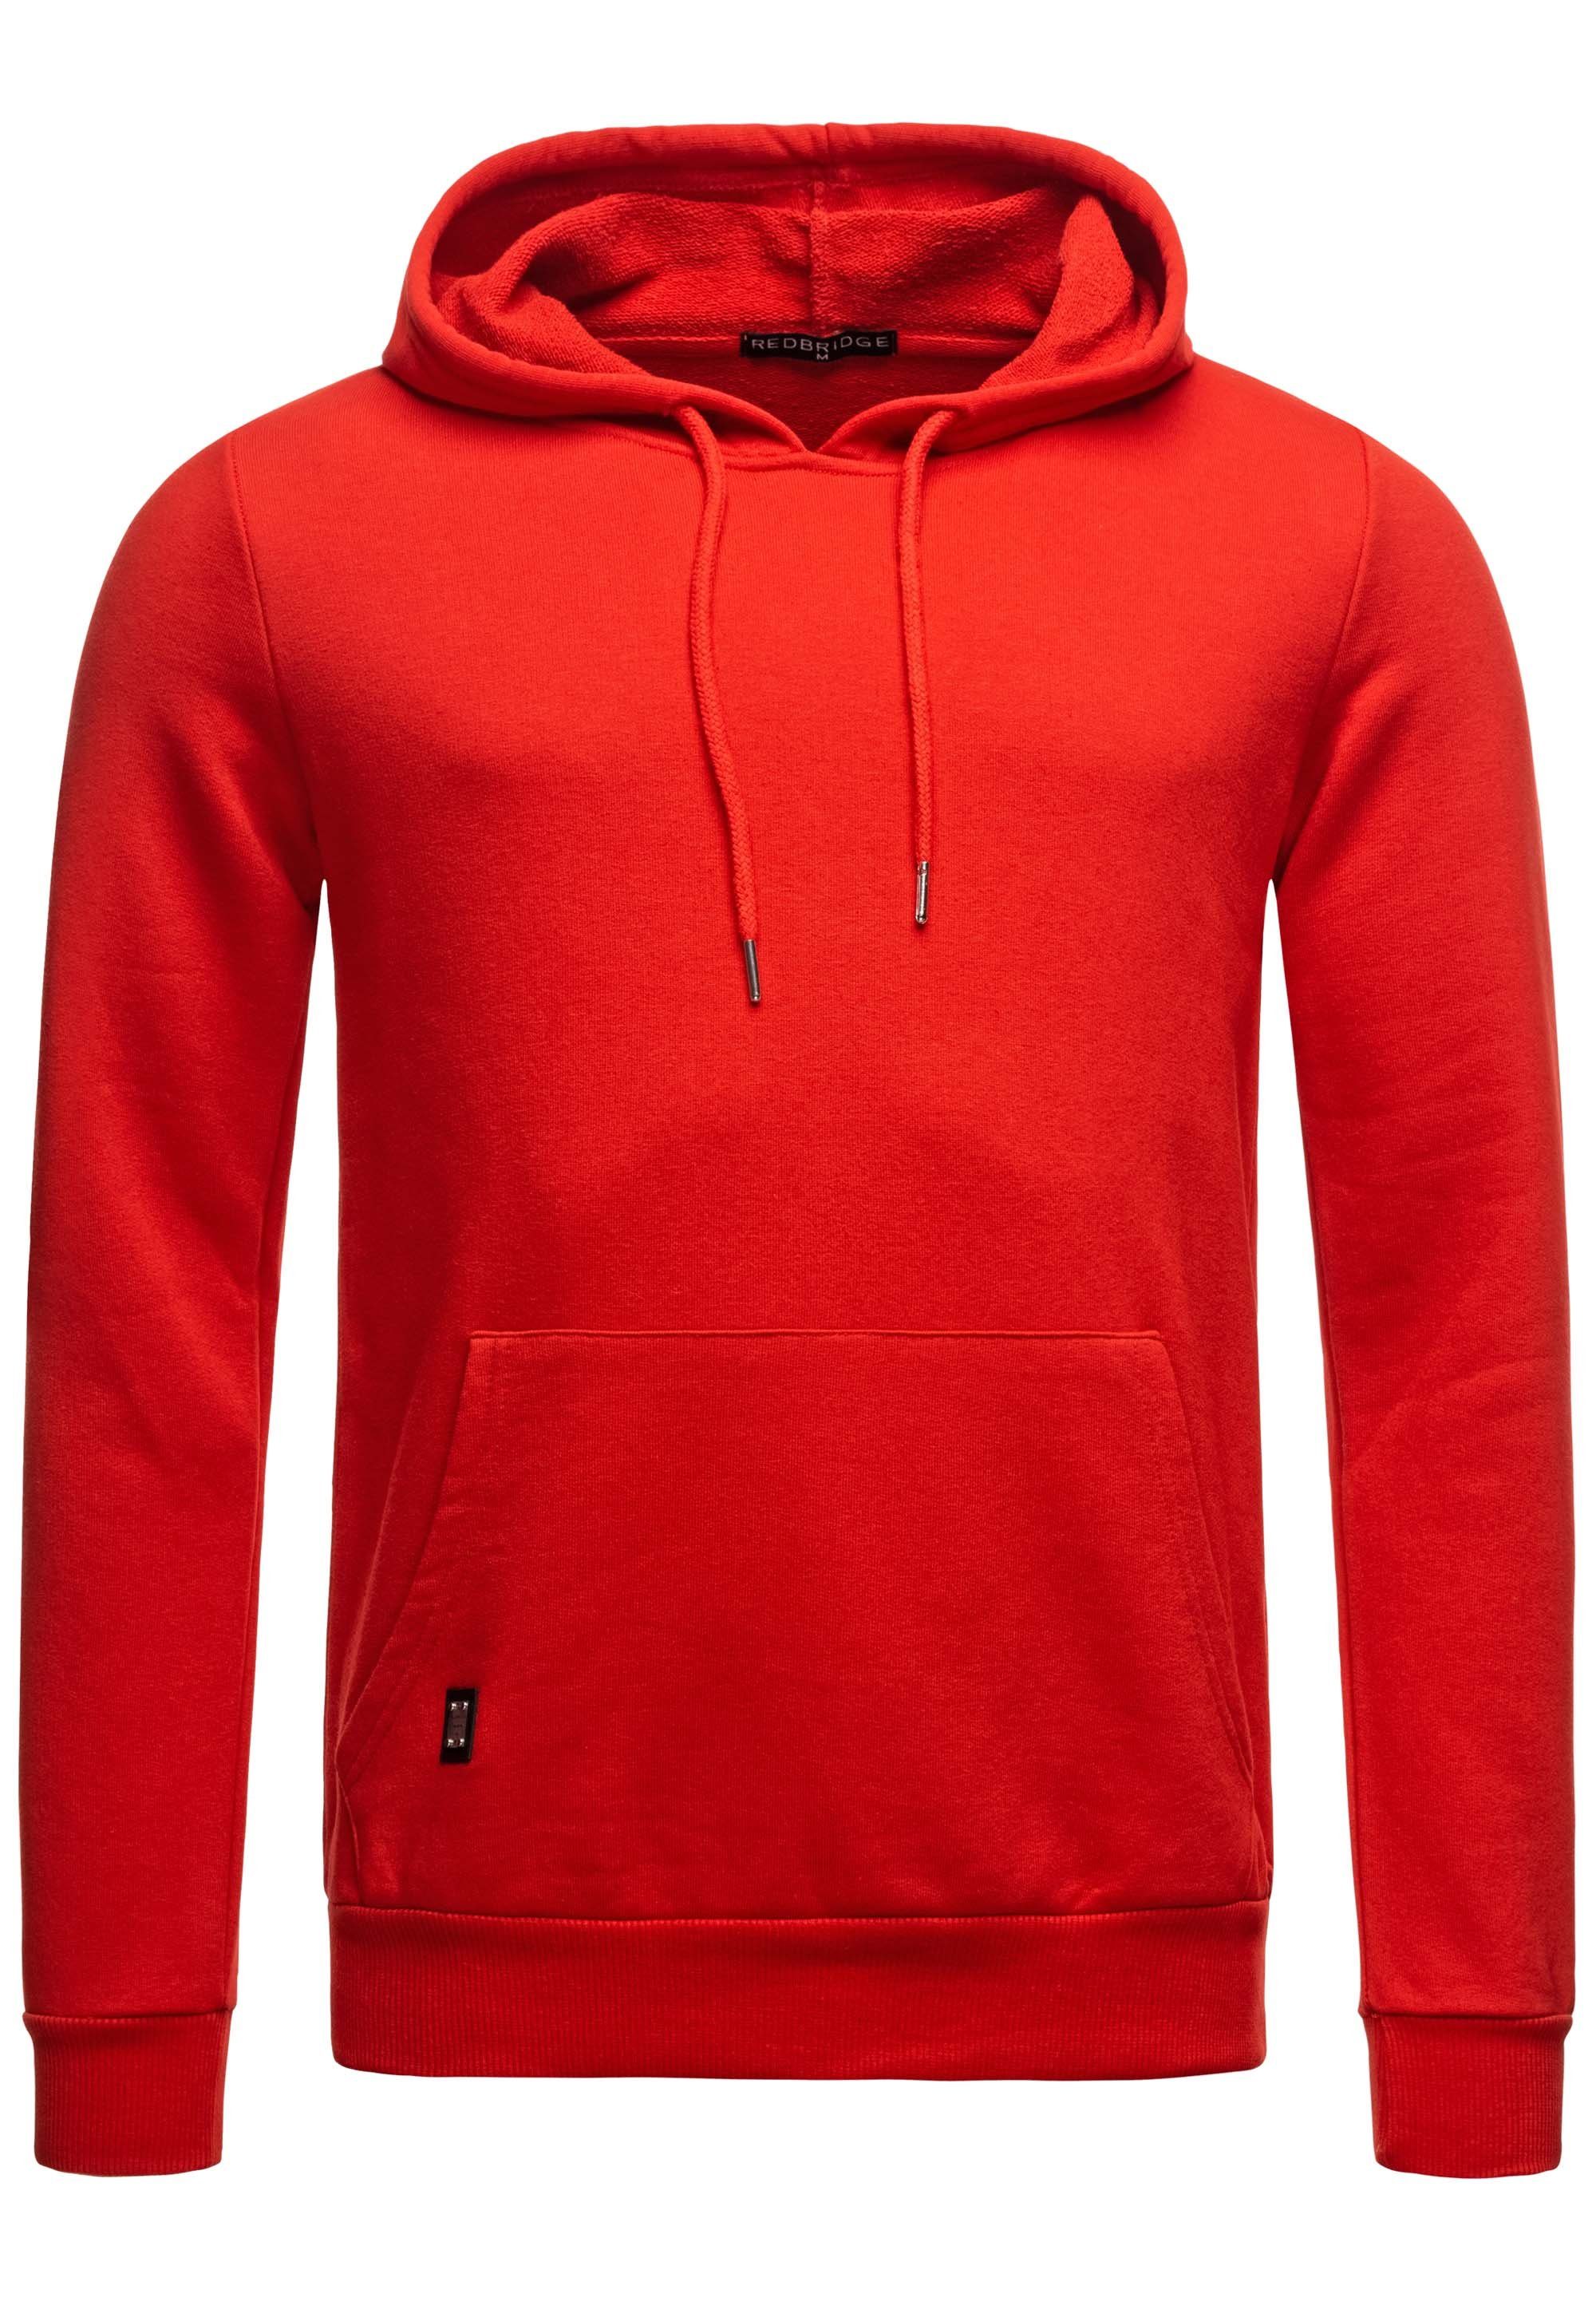 RedBridge Kapuzensweatshirt Hoodie mit Kängurutasche Premium Qualität Rot